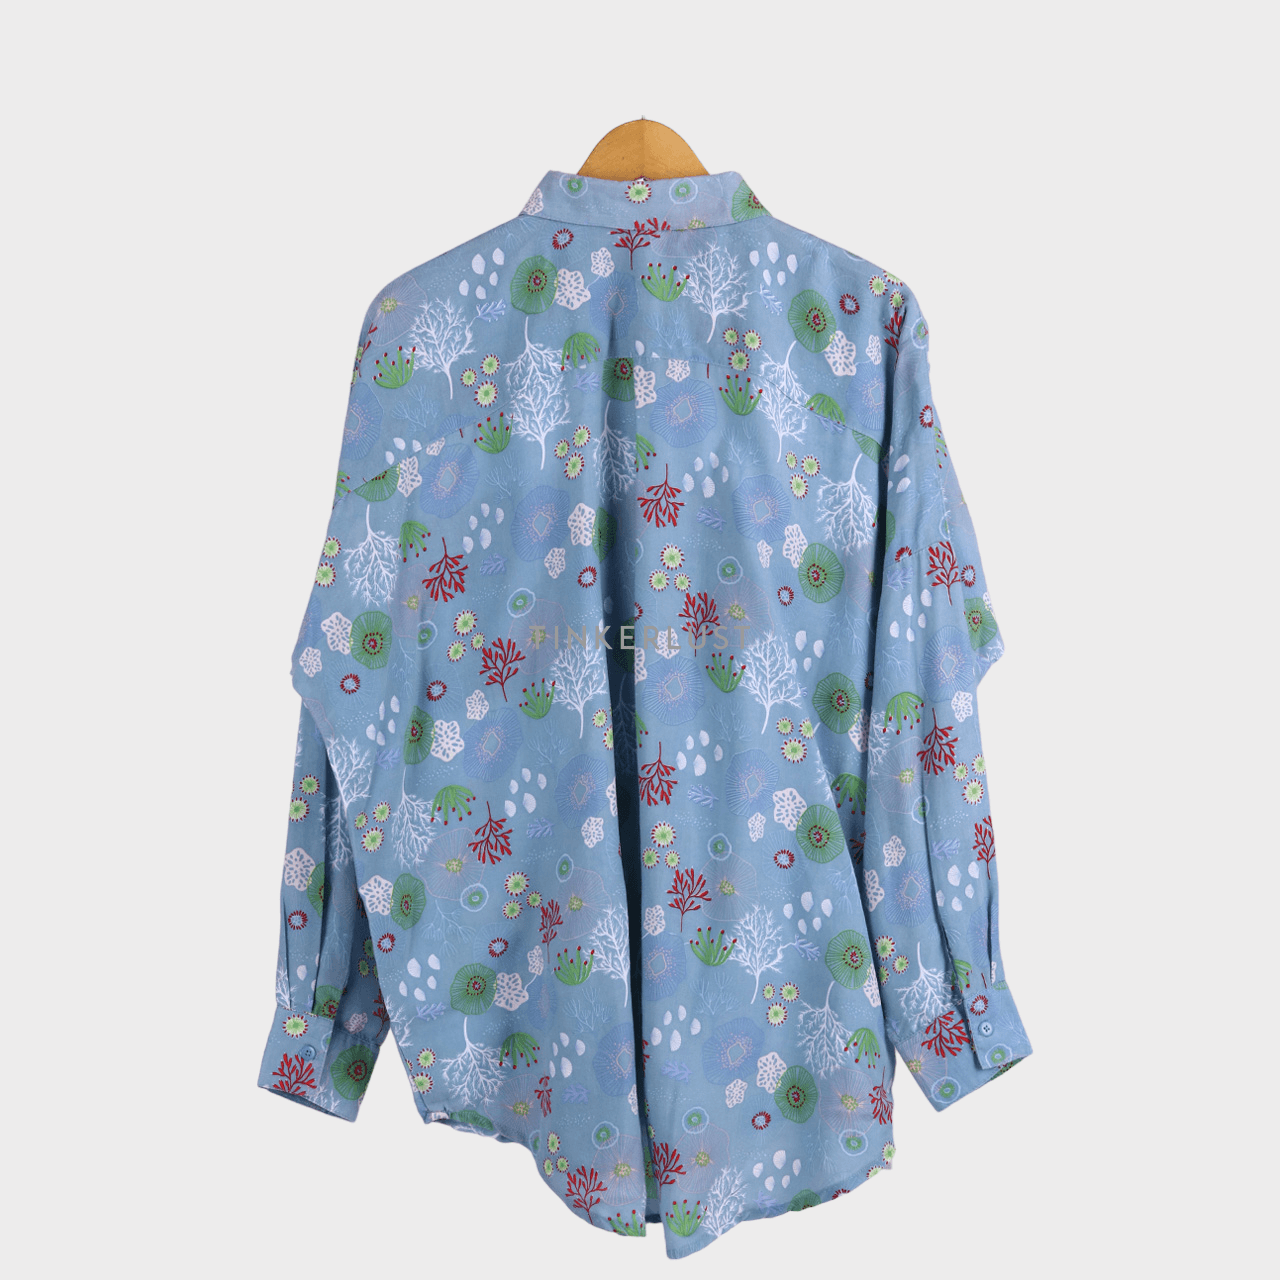 Calla Blue Coral Floral Printed Shirt